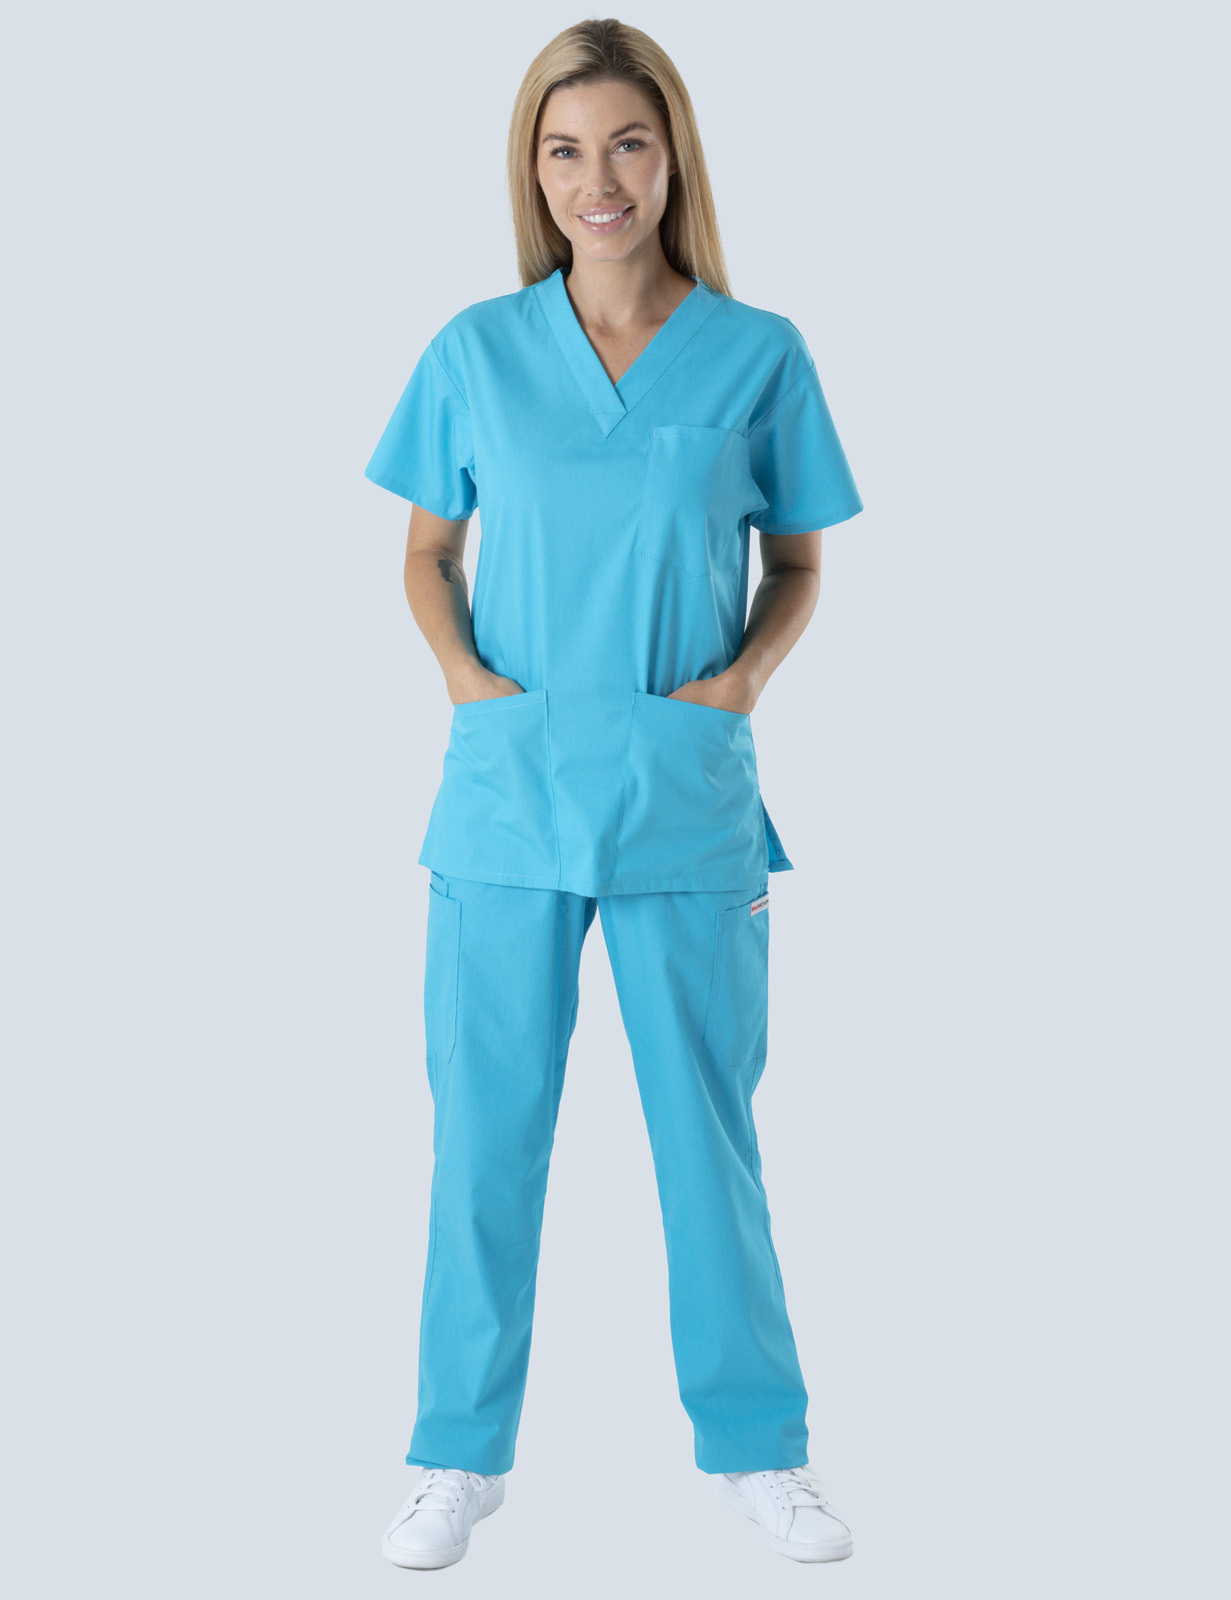 Caloundra Hospital - Enrolled Nurse (4 Pocket Scrub Top and Cargo Pants in Aqua incl Logos)